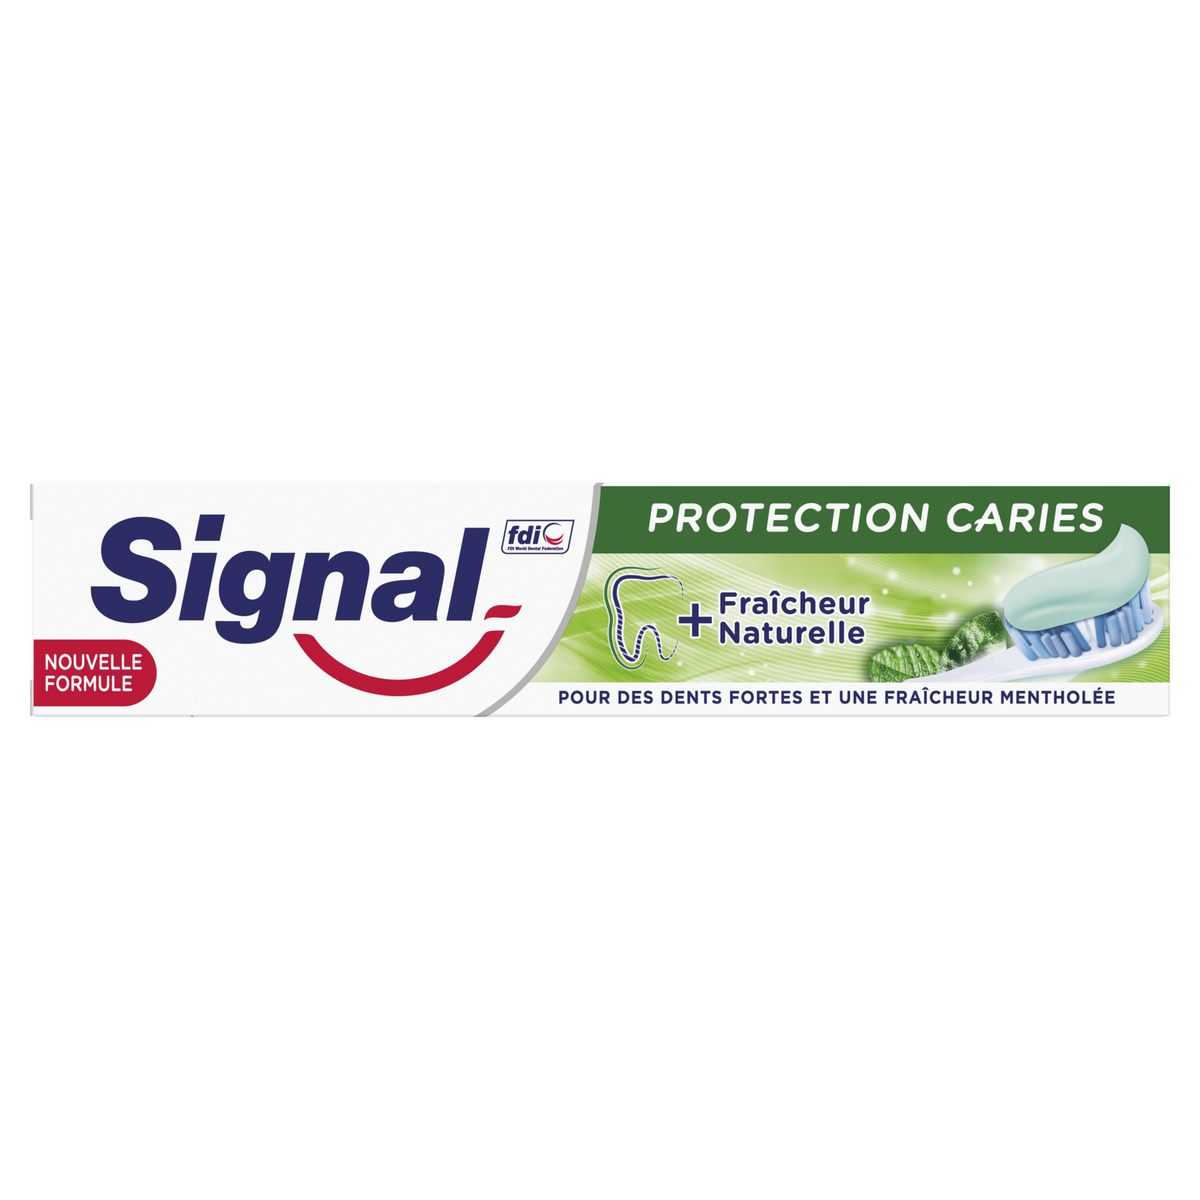 SIGNAL Dentifrice protection caries fraicheur naturelle 75ml